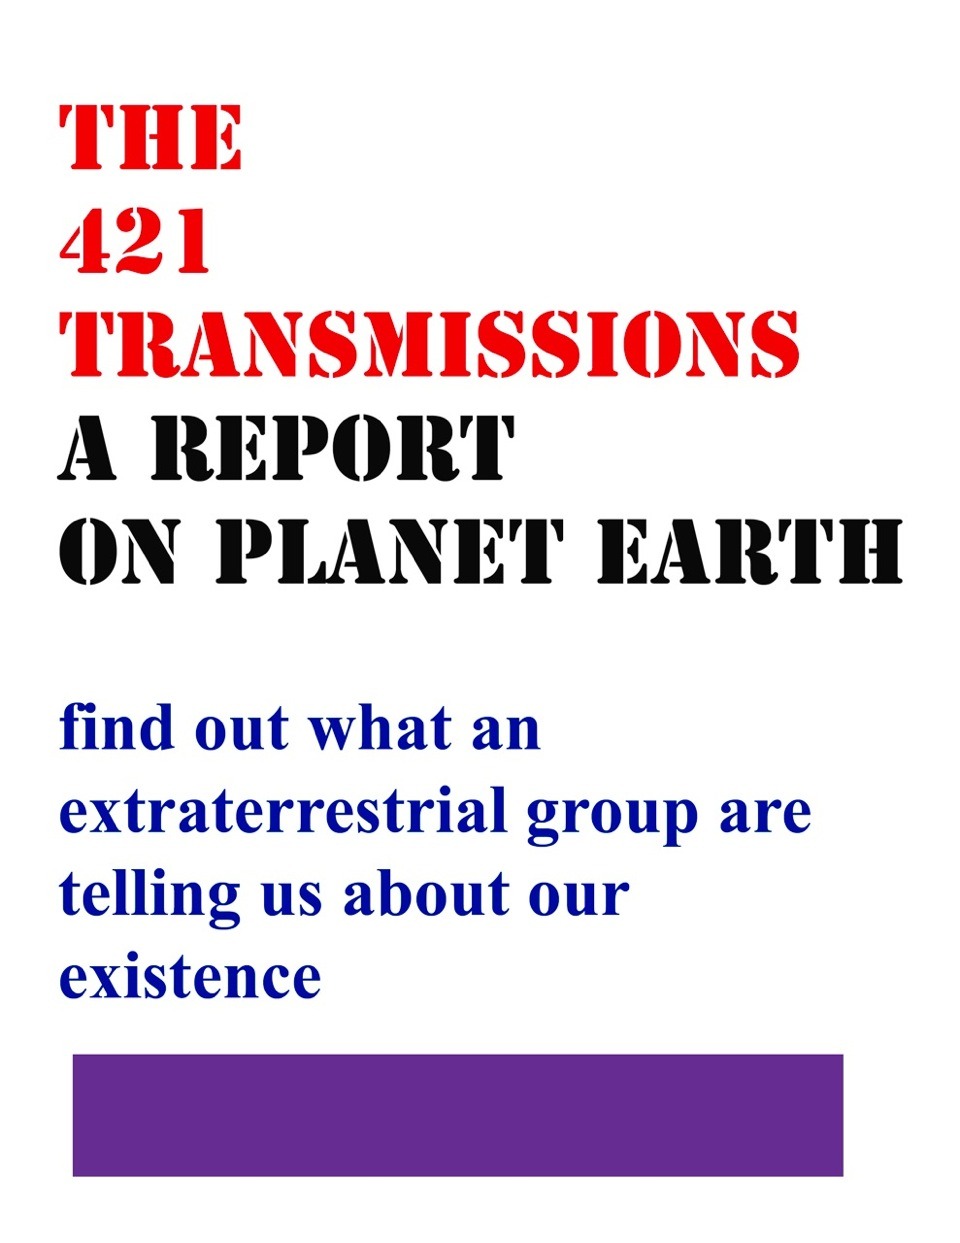 joseph-421-lally: http://www.amazon.com/421-TRANSMISSIONS-REPORT-PLANET-EARTH-ebook/dp/B00MV0GH72/ref=sr_1_1?ie=UTF8&amp;qid=1408619672&amp;sr=8-1&amp;keywords=the+421+transmissions MUST READ BOOK 